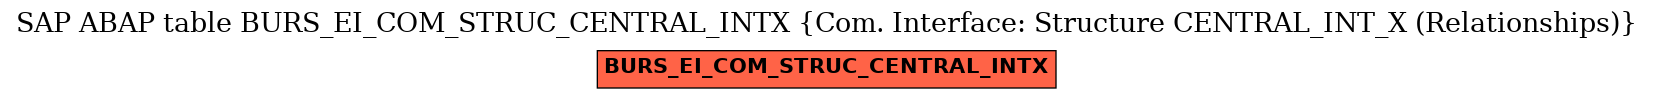 E-R Diagram for table BURS_EI_COM_STRUC_CENTRAL_INTX (Com. Interface: Structure CENTRAL_INT_X (Relationships))